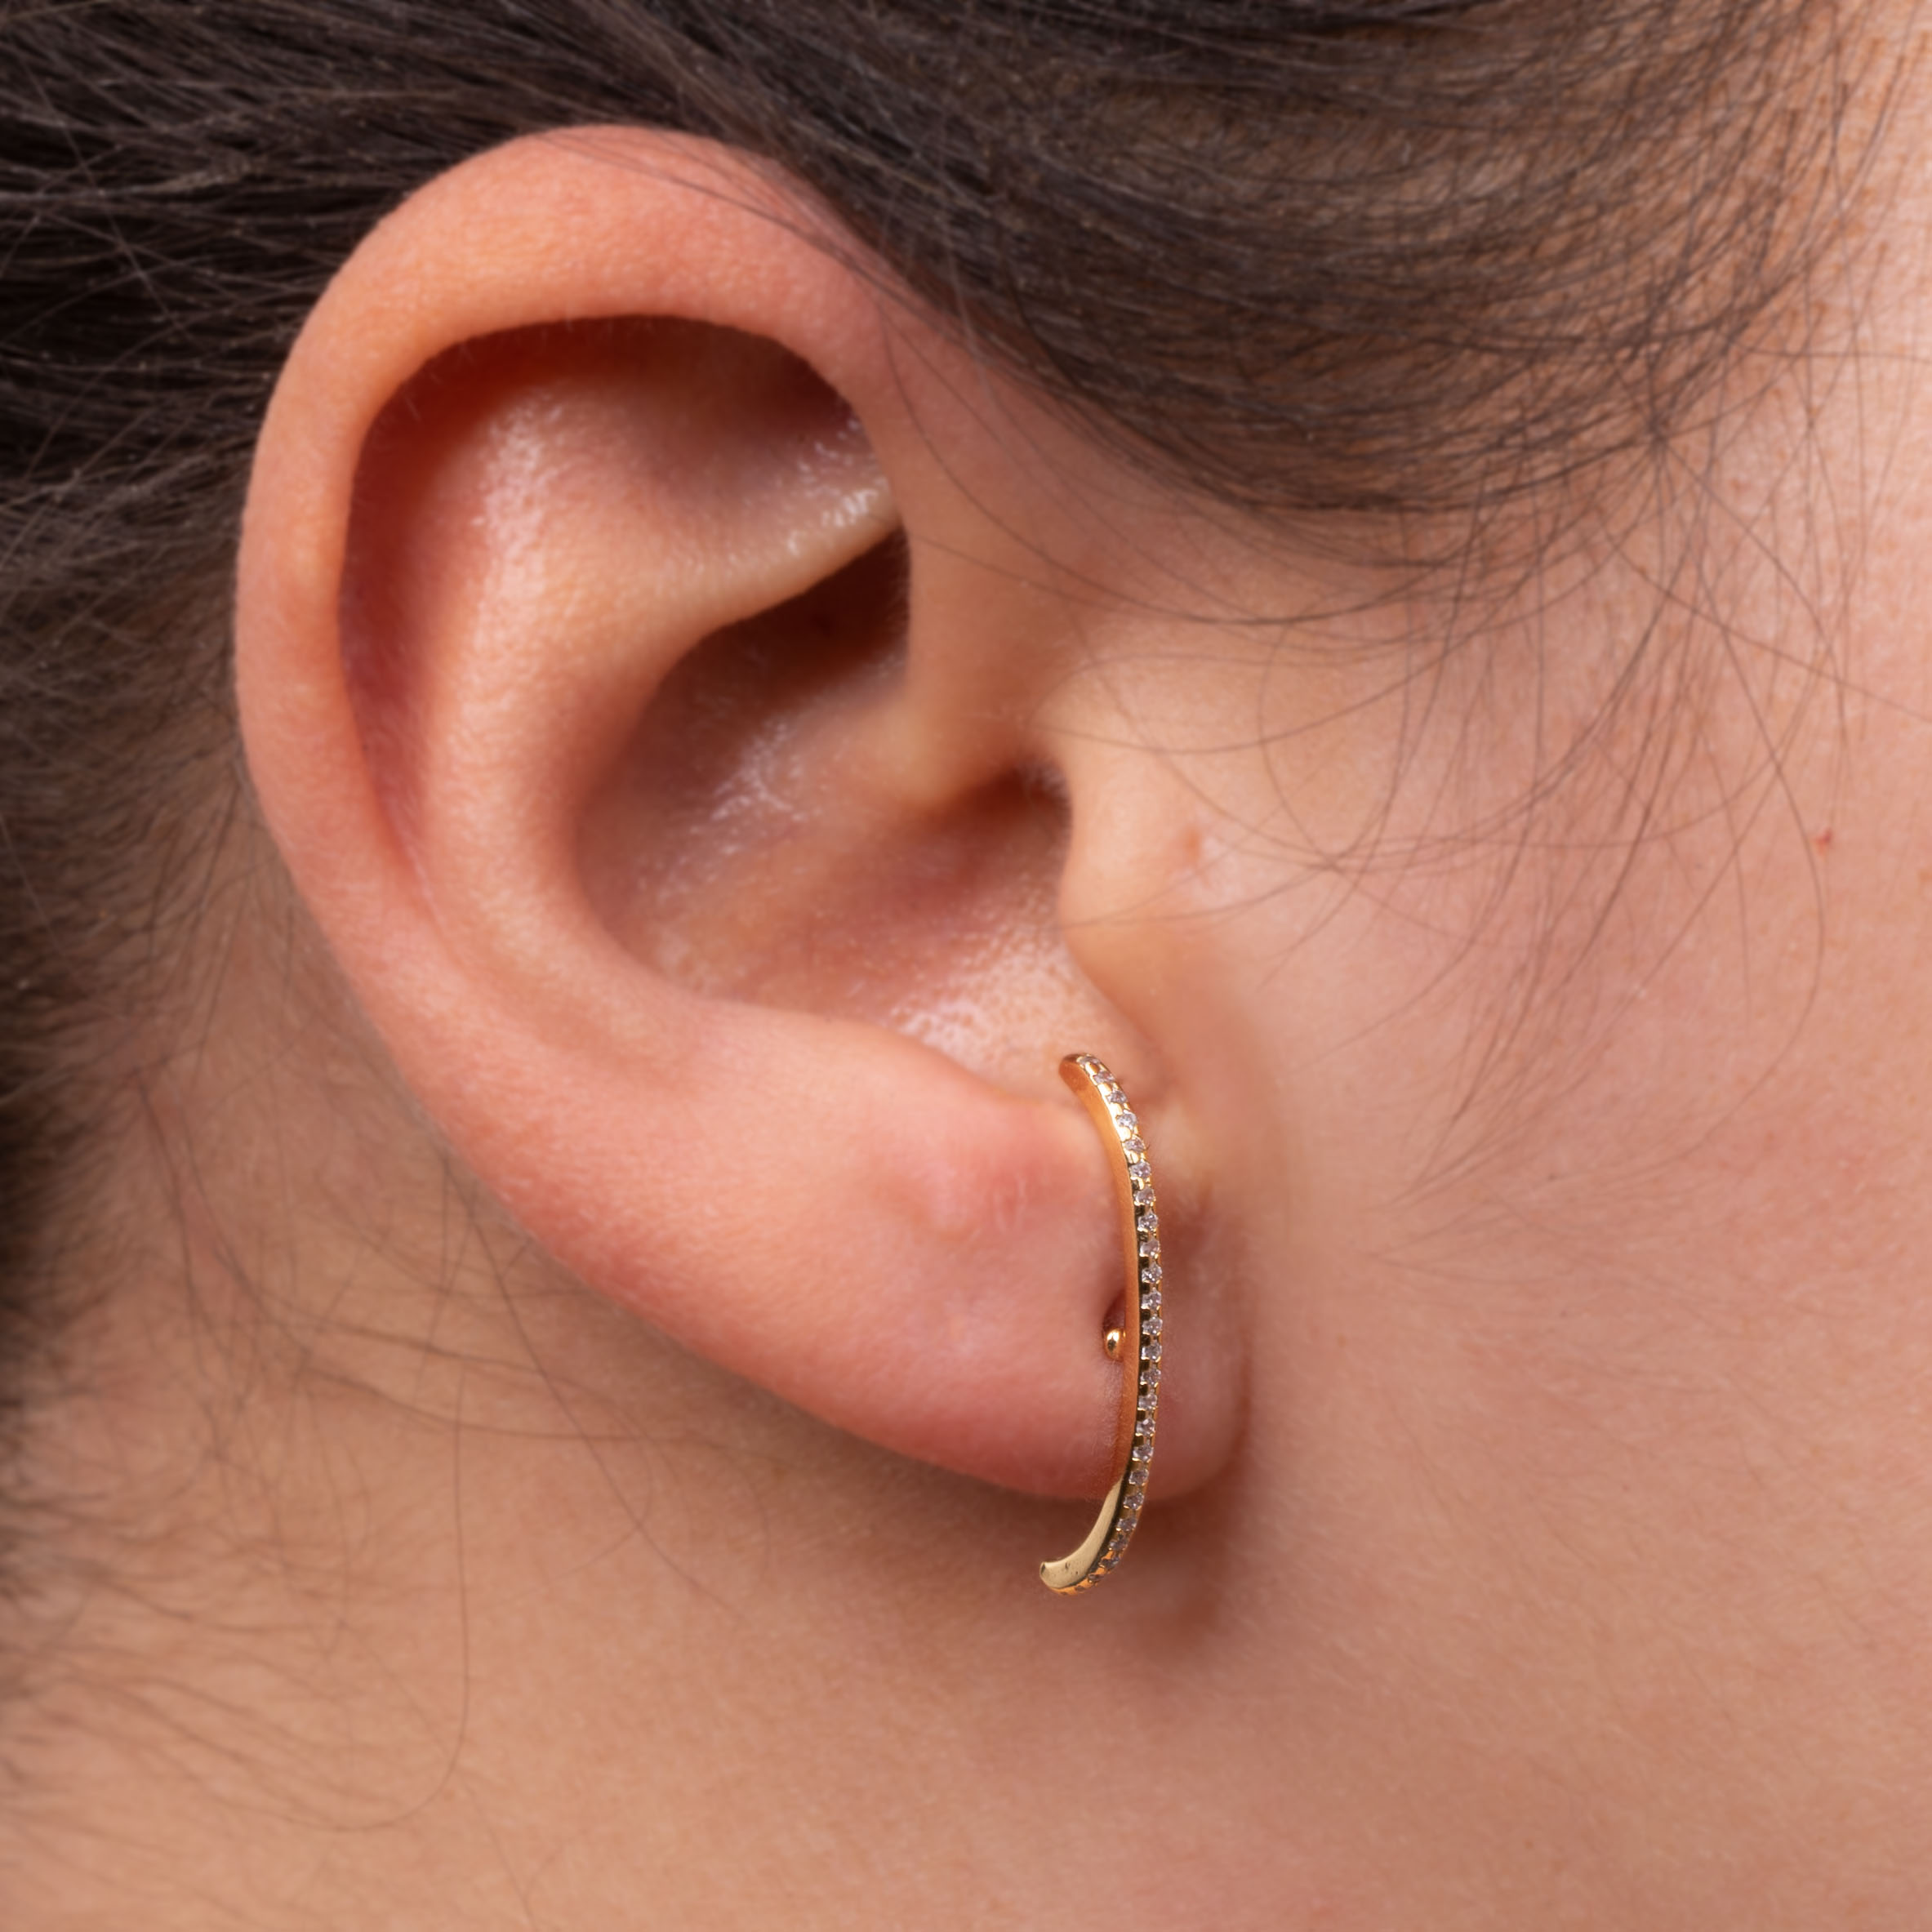 2.1 cm Destiny gold-plated earring